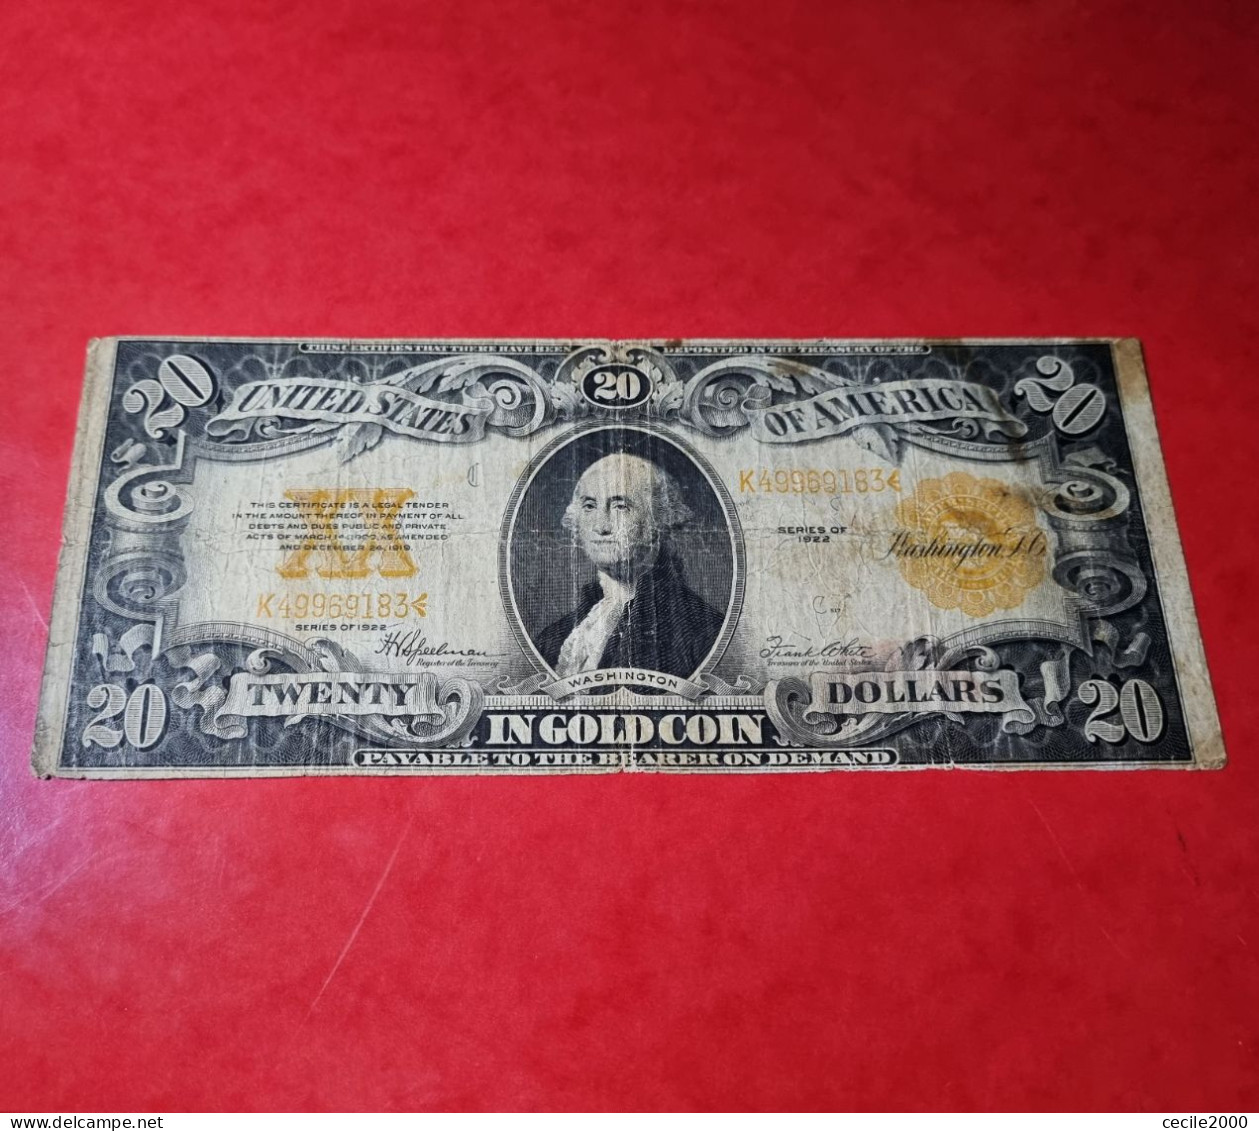 1922 USA $20 DOLLARS *GOLD CERTIFICATE* UNITED STATES BANKNOTE F/F+ BILLETE ESTADOS UNIDOS *COMPRAS MULTIPLES CONSULTAR* - Gold Certificates – Títulos Oro (1882-1922)